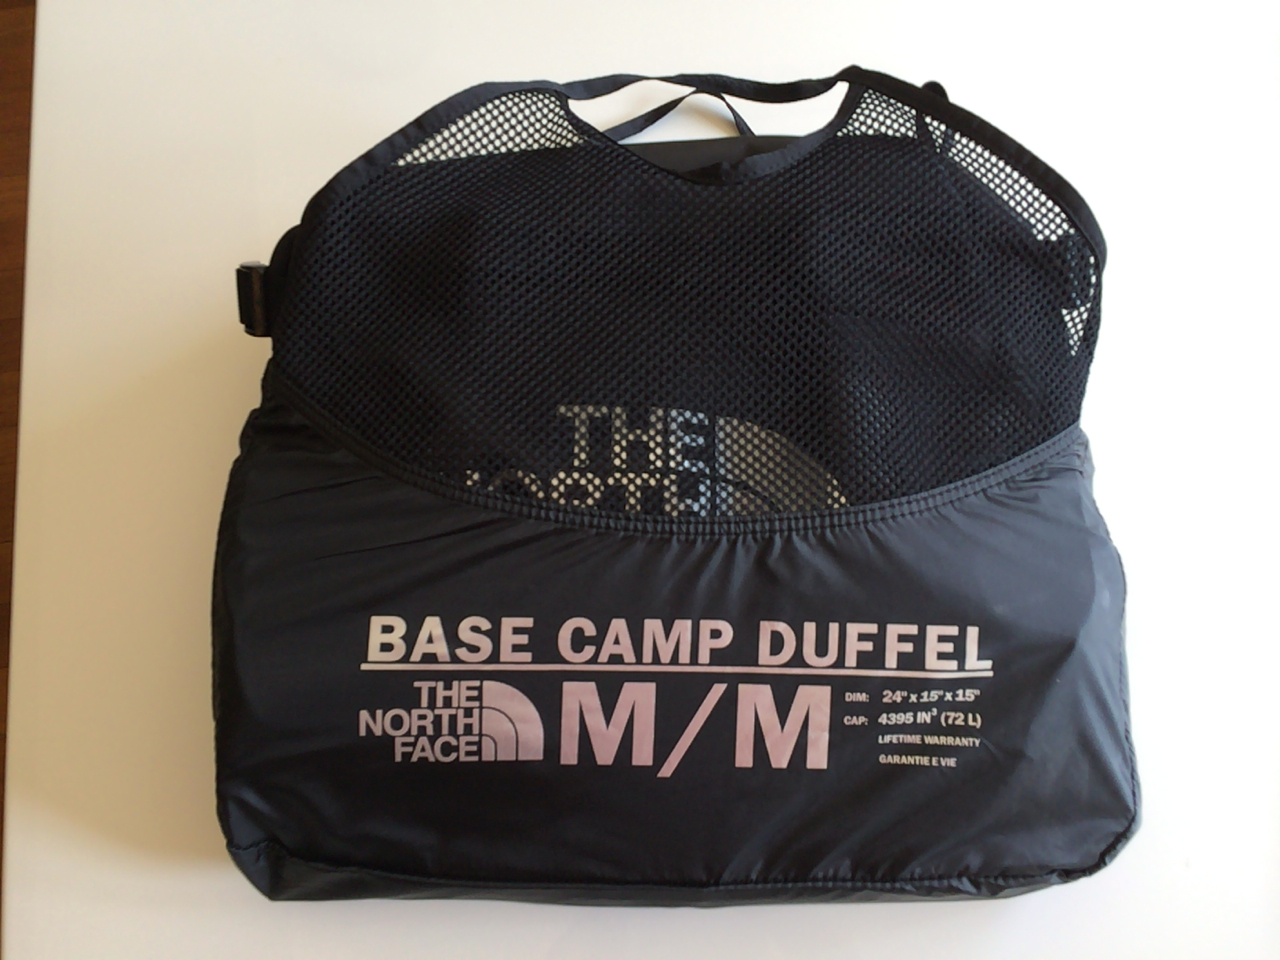 The North Face 2wayボストンバッグ Base Camp Duffel M 購入 デカいけど便利でカッコいい 立花岳志が より自由で楽しい人生を追求しシェアするブログ